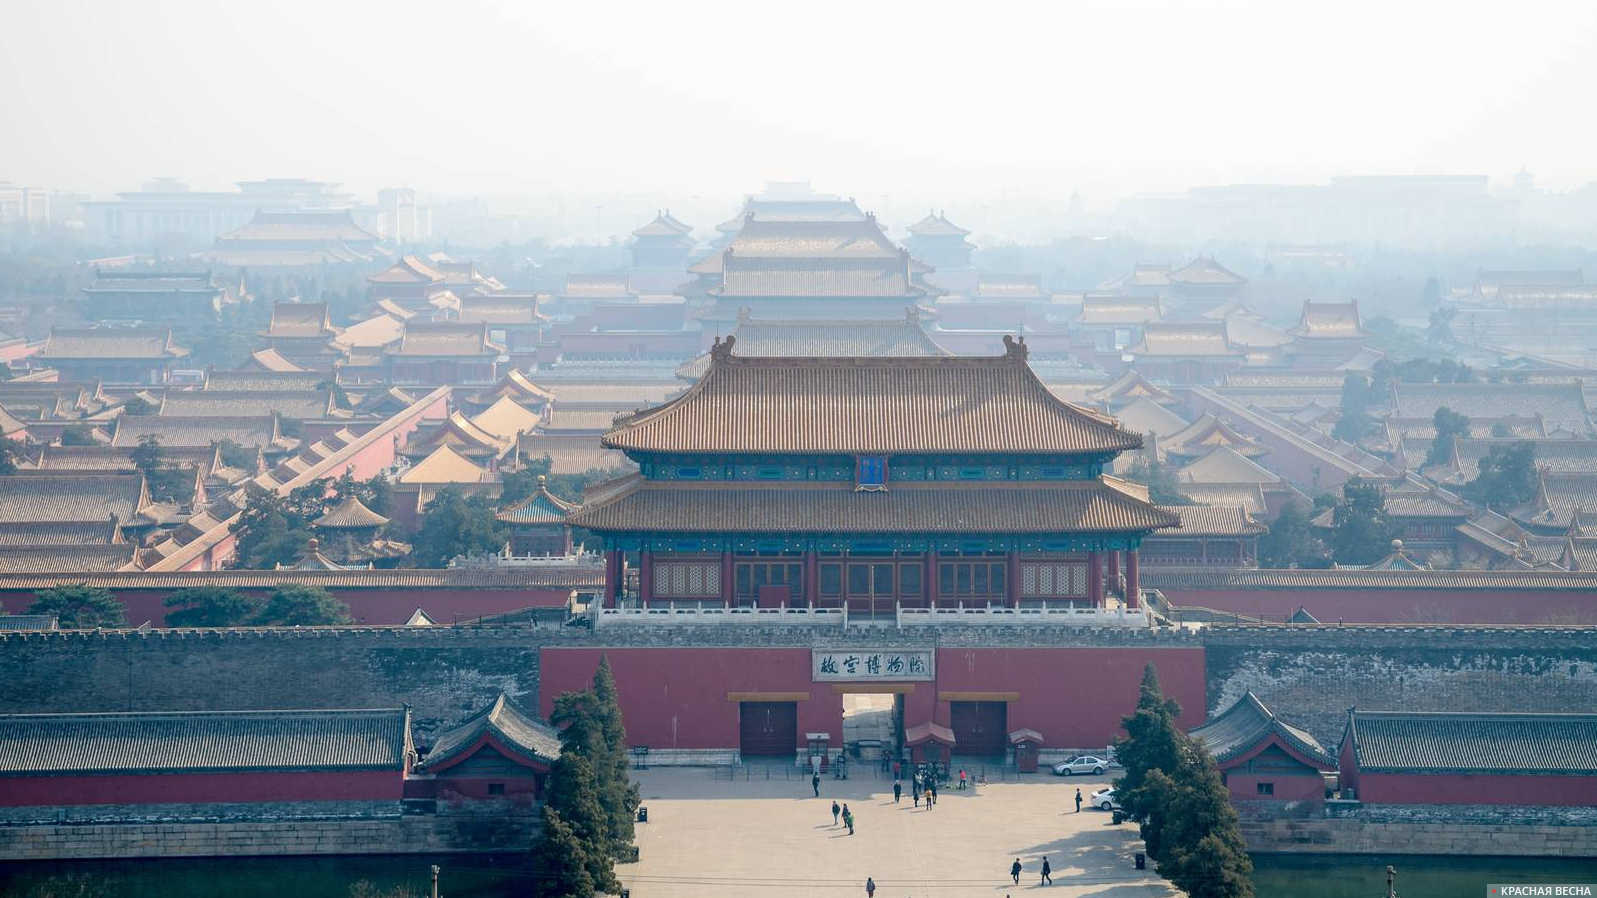 The Emperor's City. Beijing, China